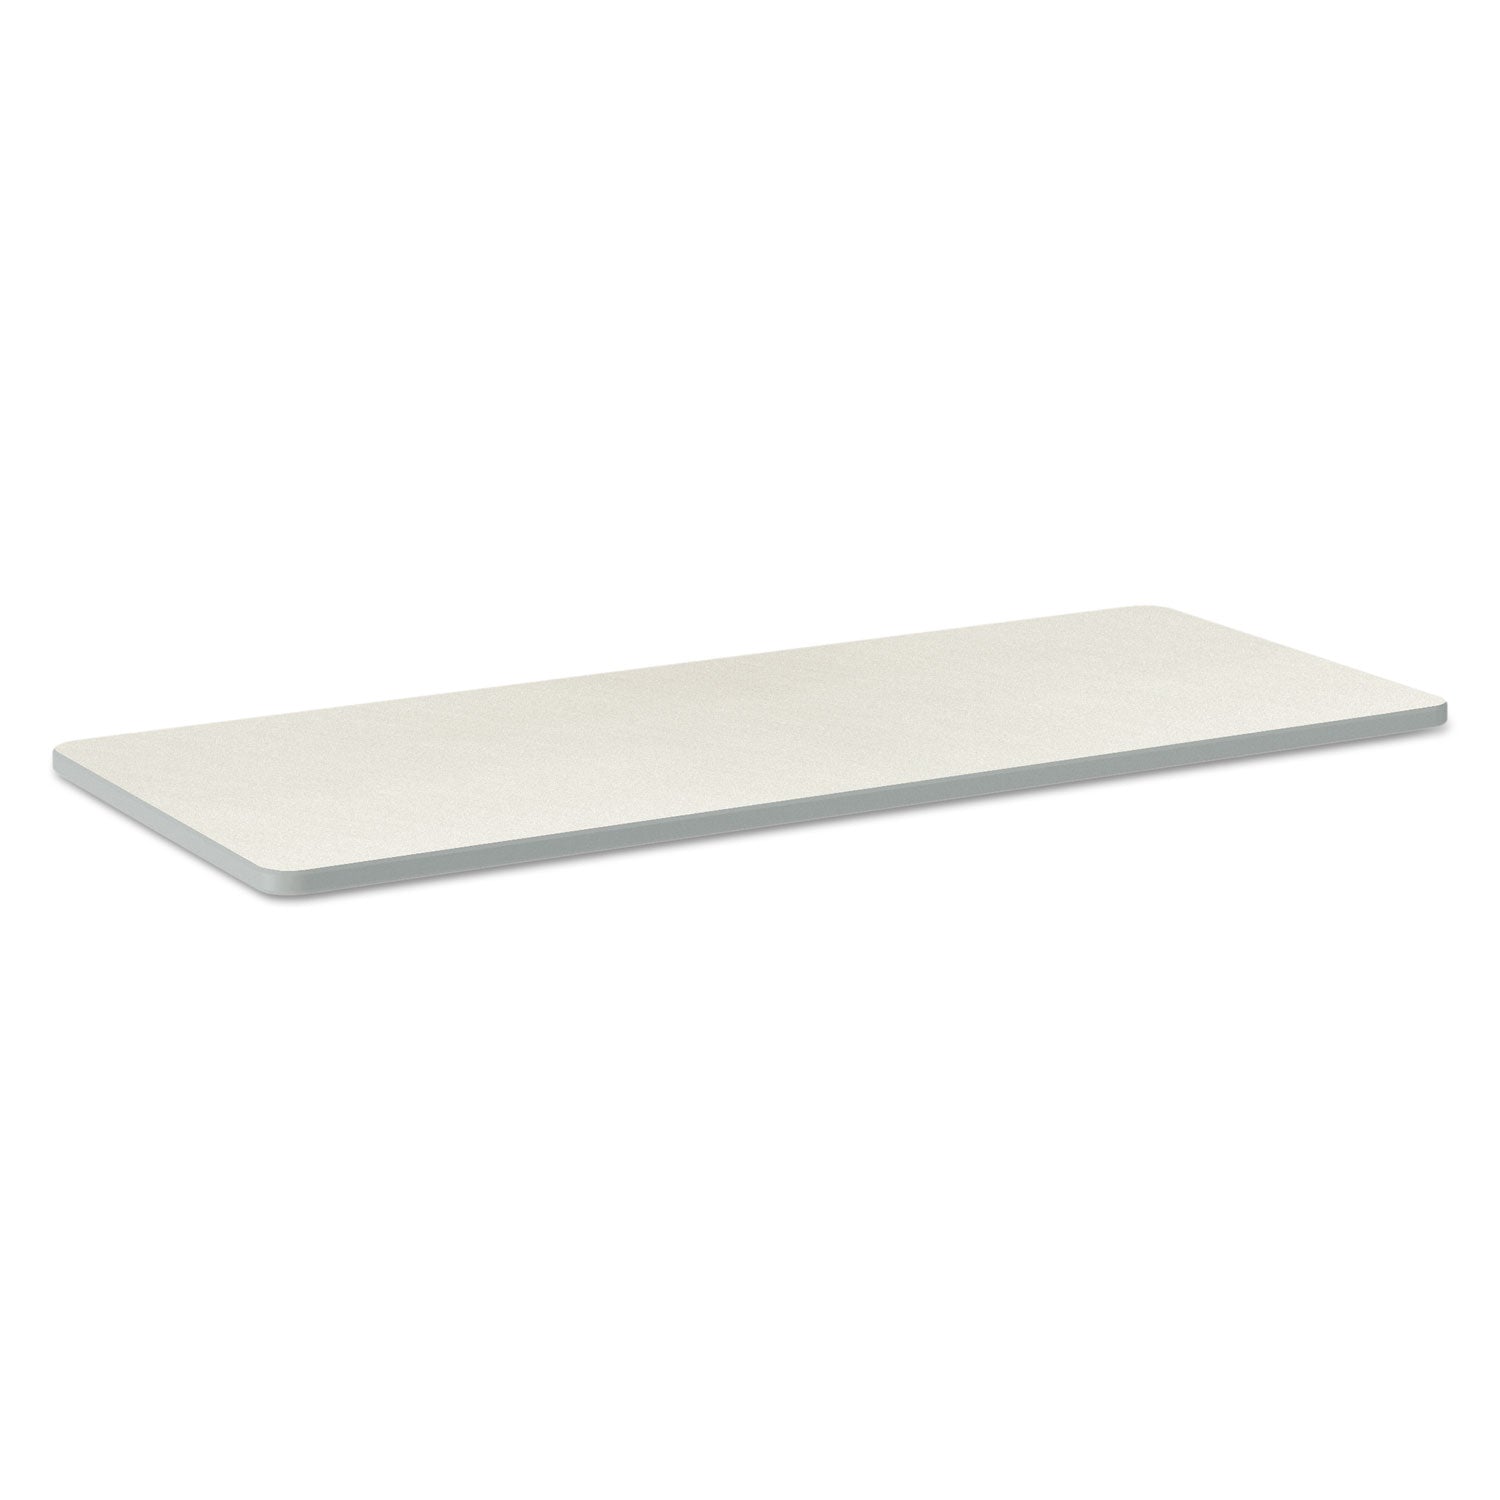 build-rectangle-shape-table-top-60w-x-24d-silver-mesh_hontr2460enb9k - 1